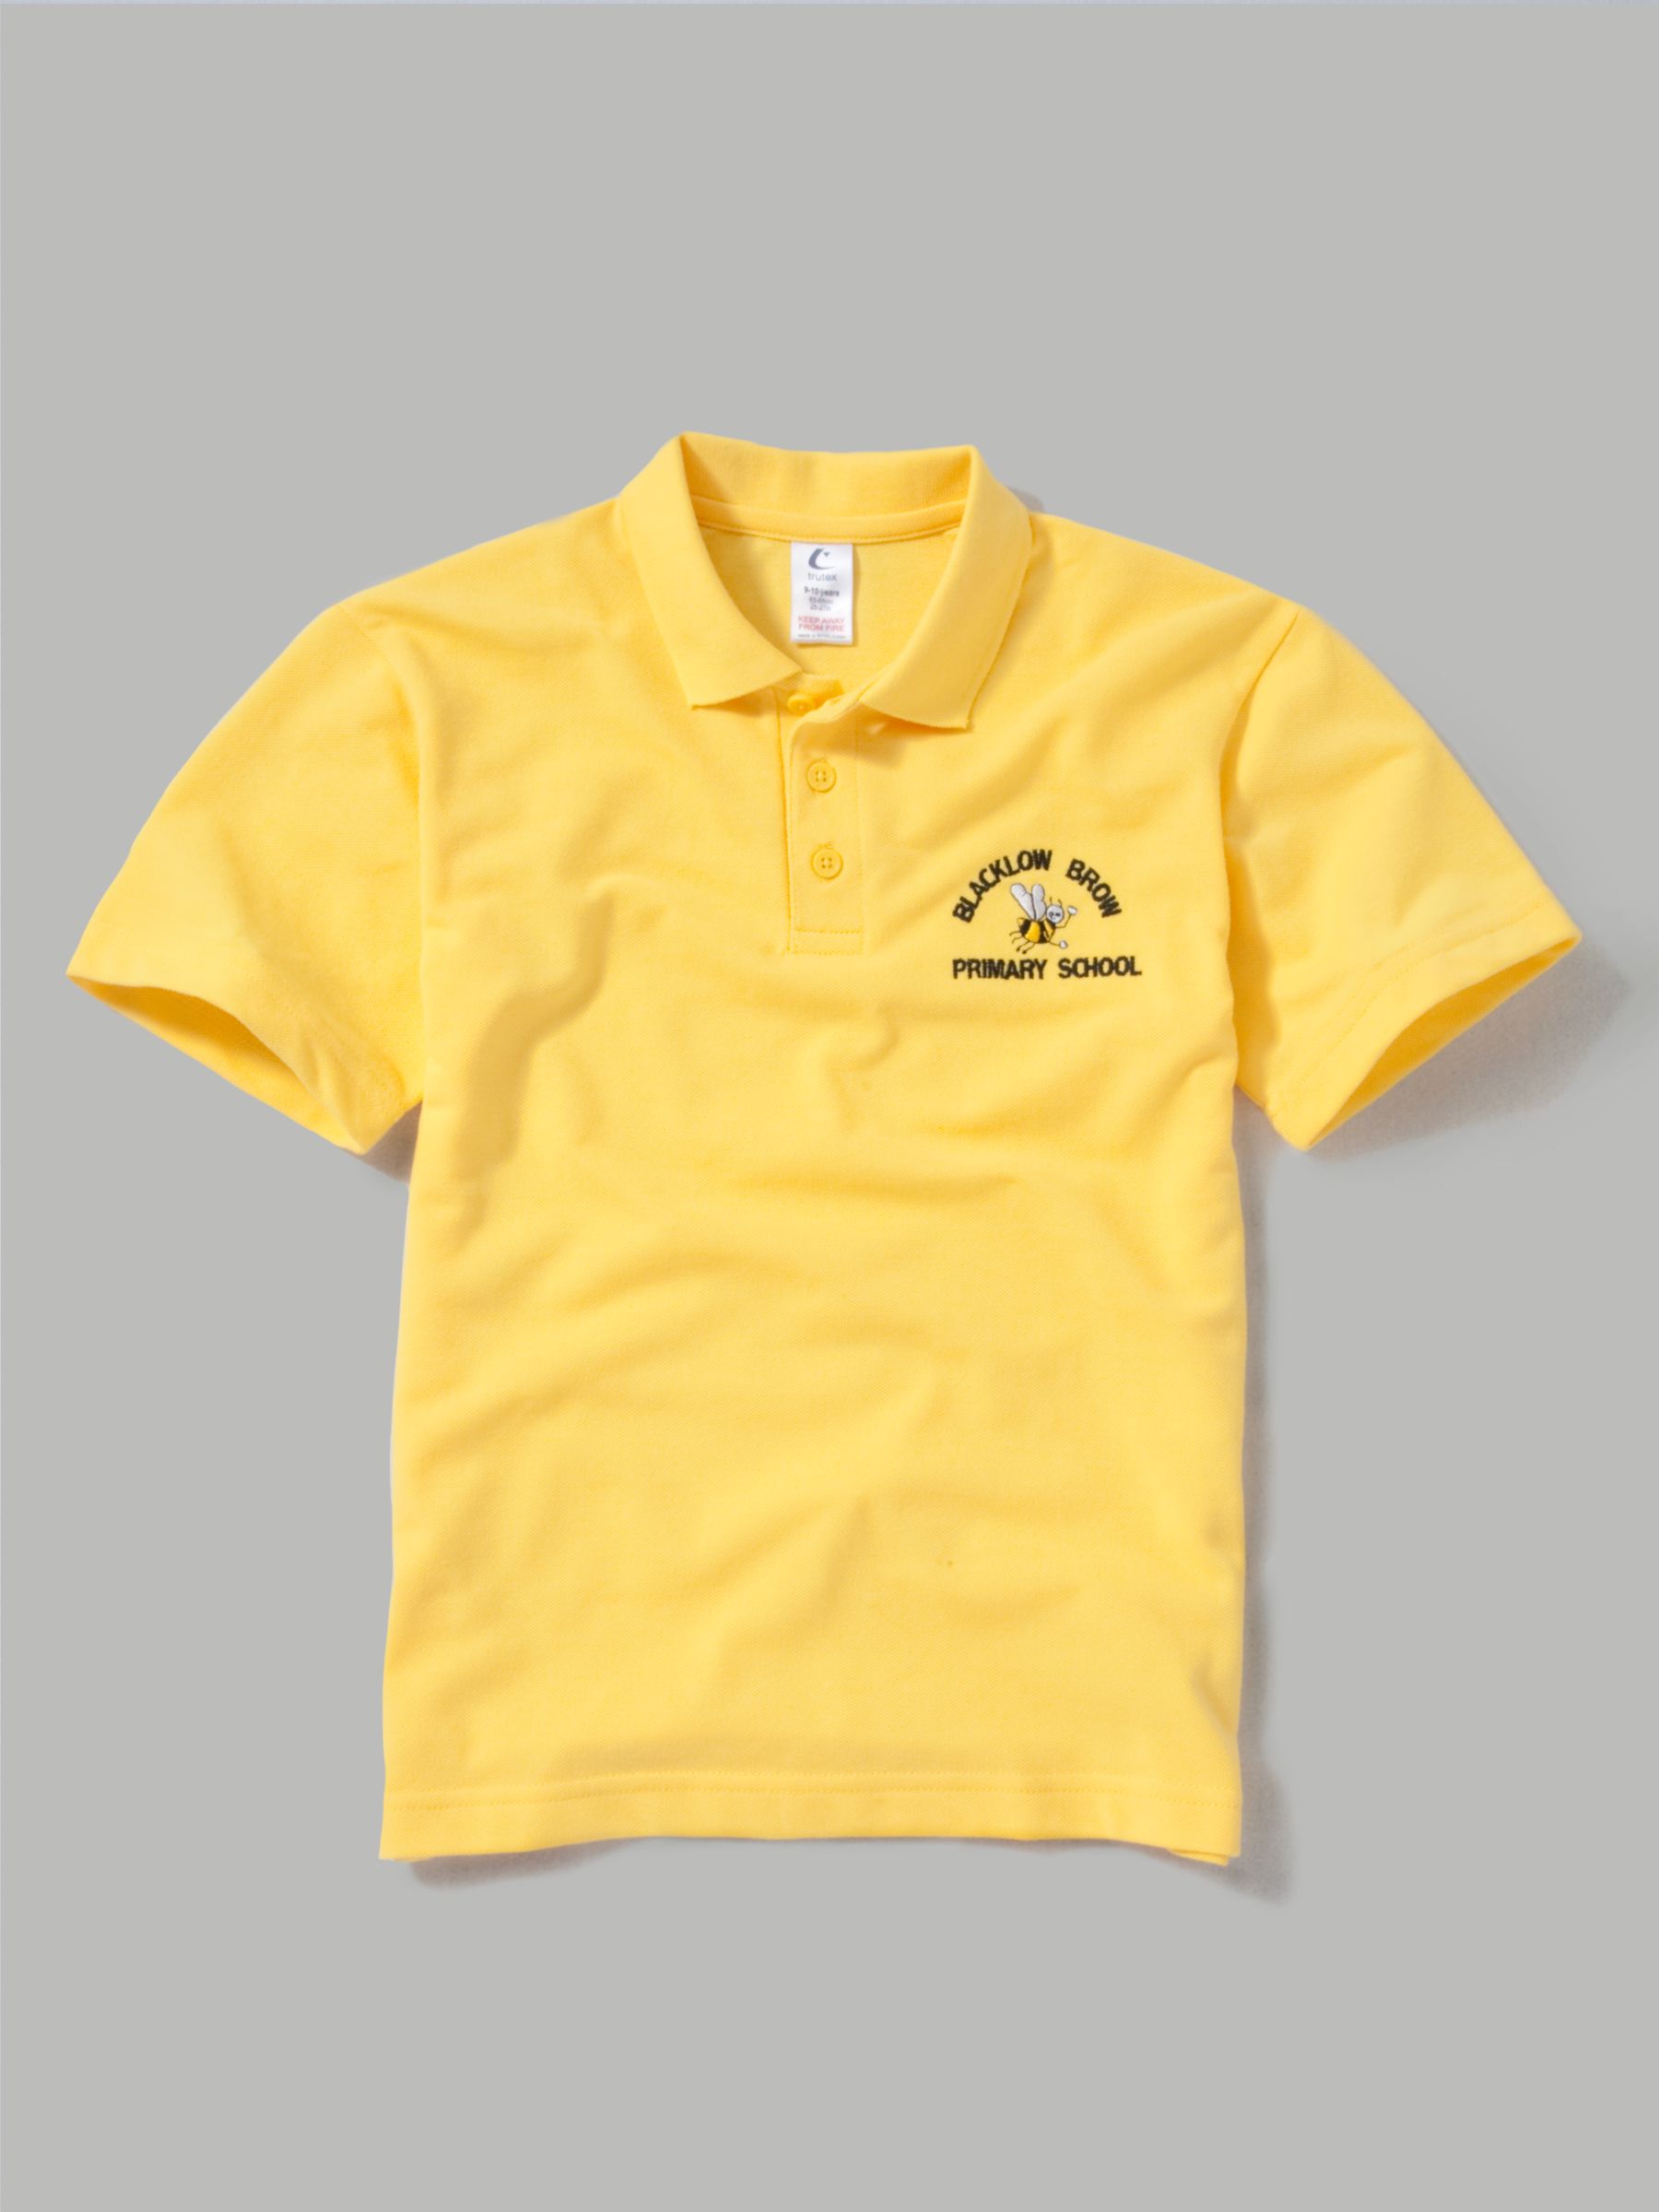 Blacklow Brow Primary School Unisex Polo Shirt,